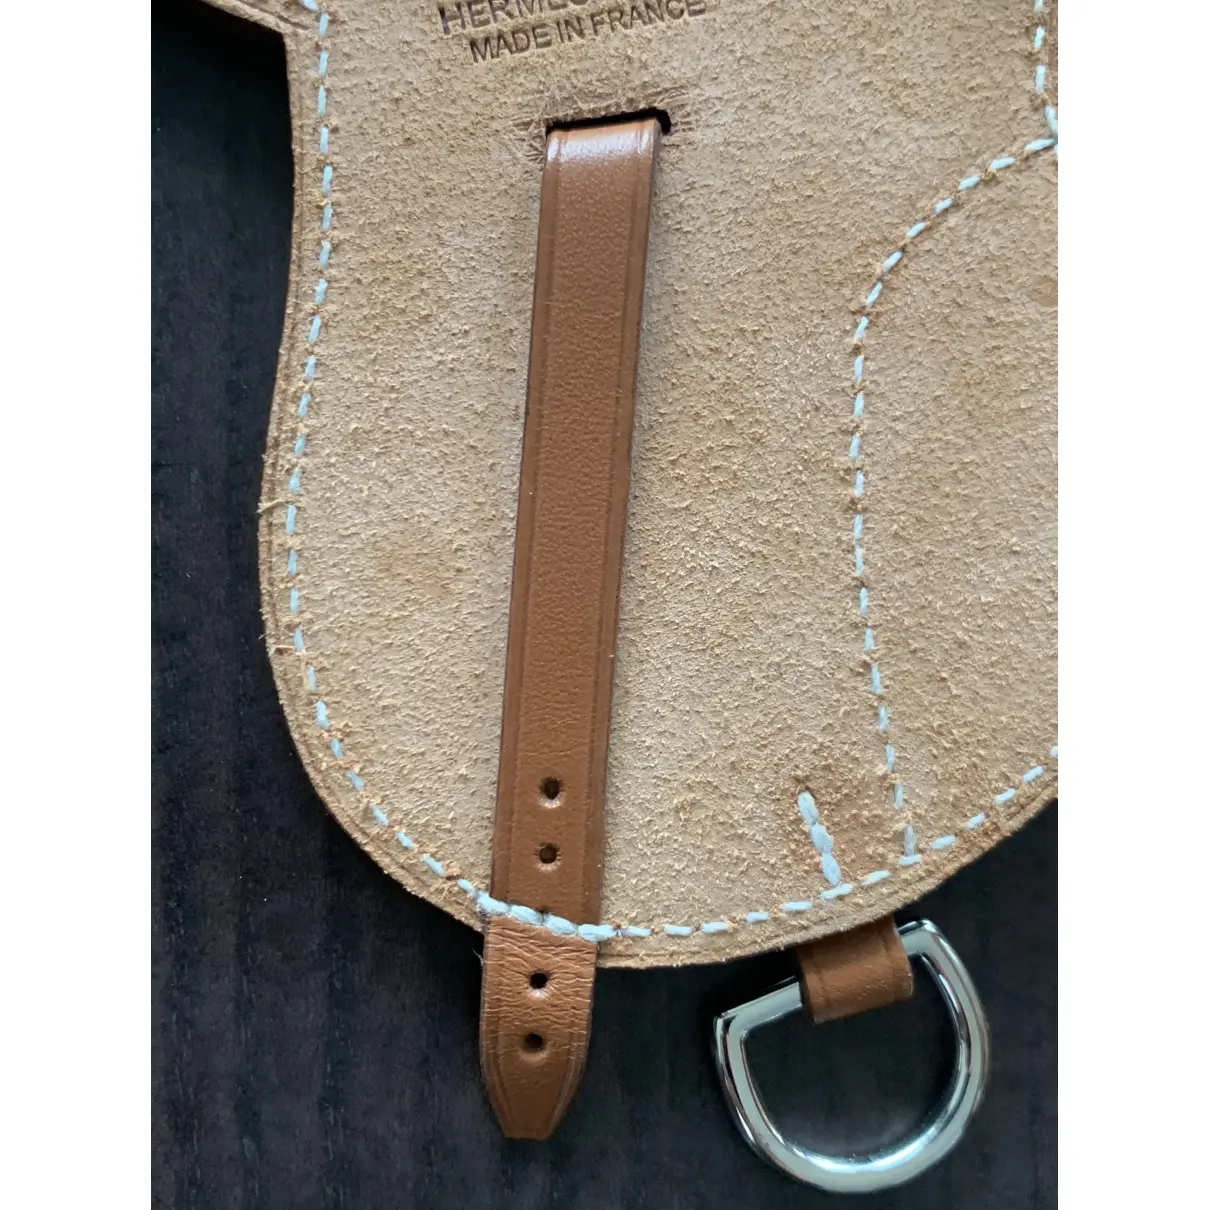 Paddock selle leather bag charm Hermès